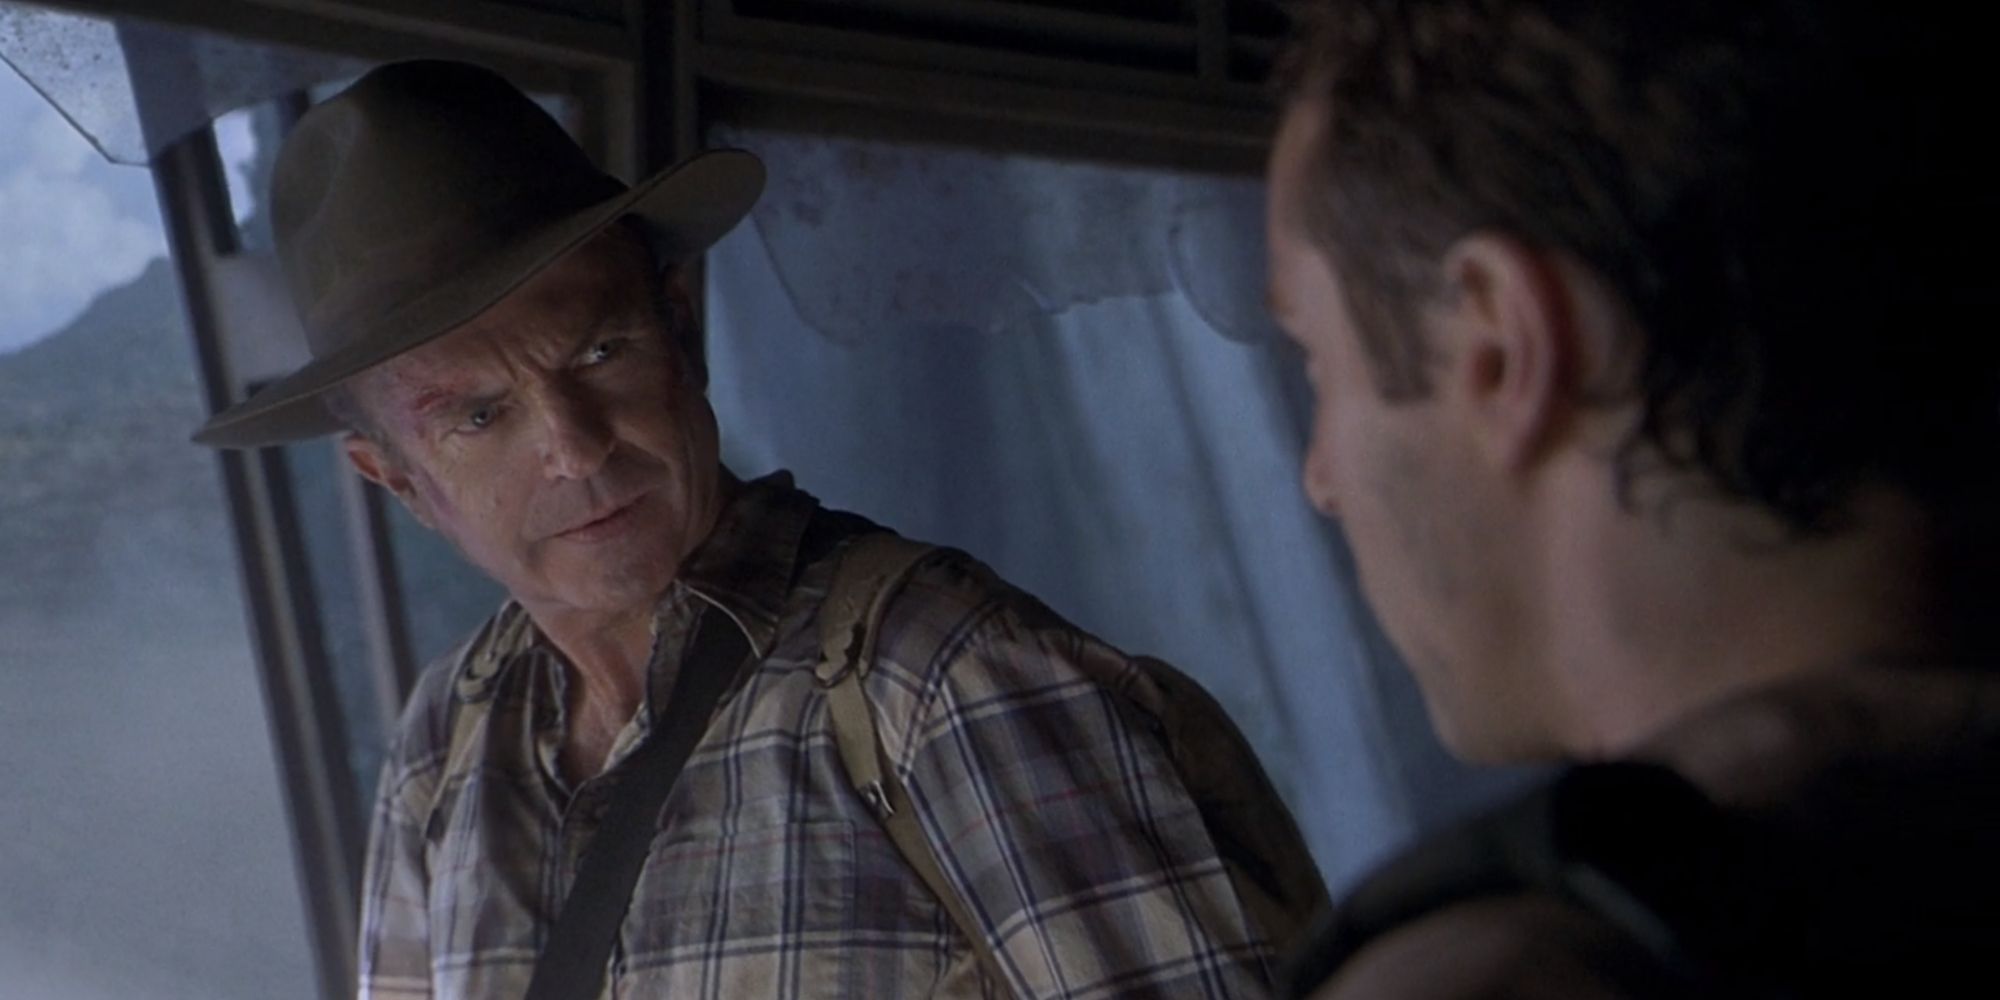 Alan Grant confronting Billy Brennan in Jurassic Park III